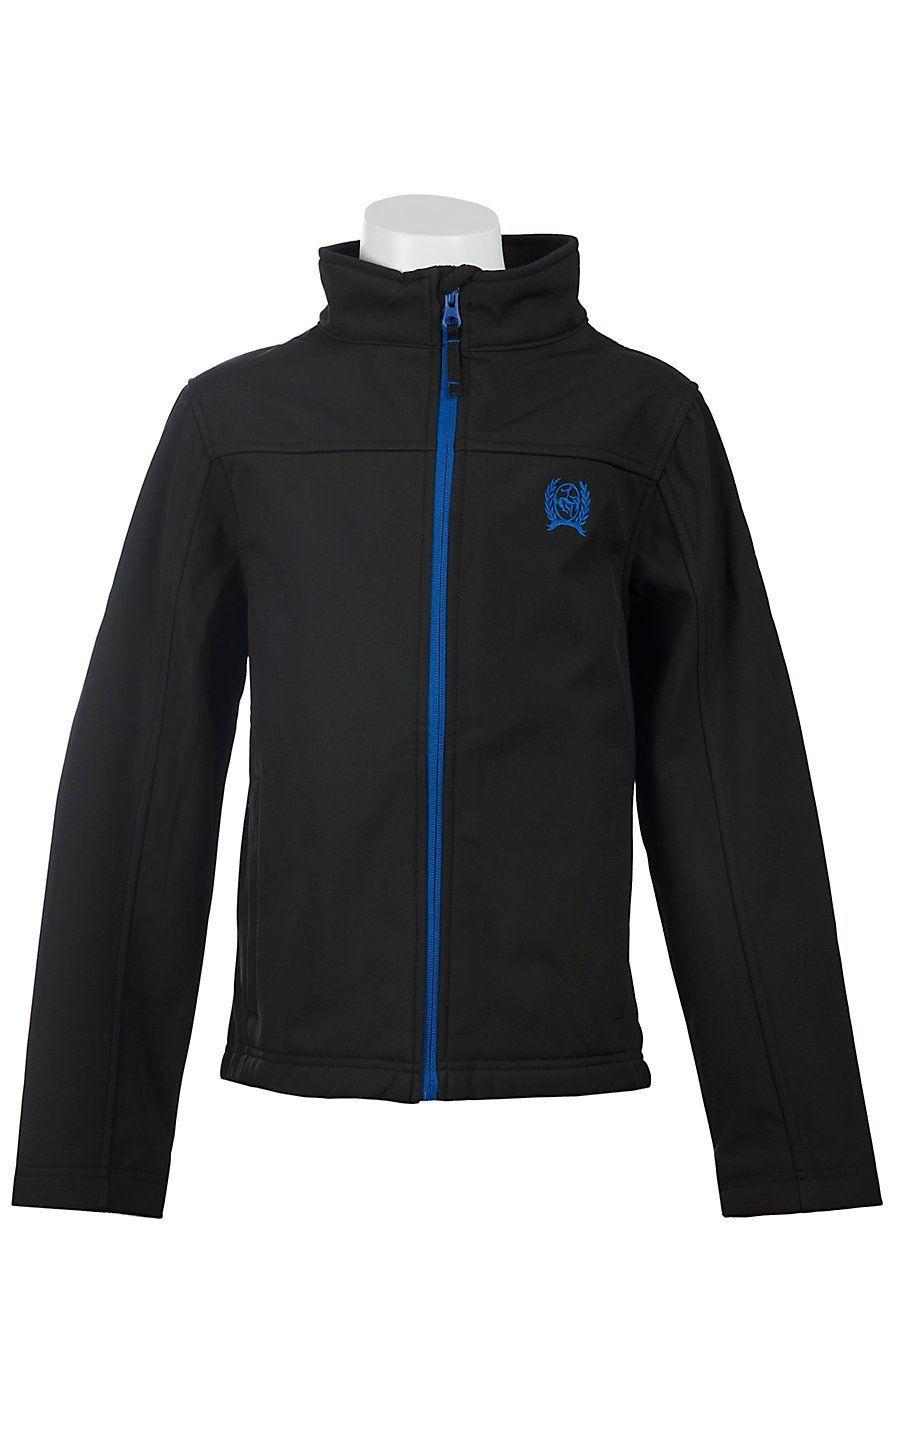 Western Clothing and Apparel Logo - Cinch® Boy's Black with Blue Logos Bonded Jacket J7440001 ...